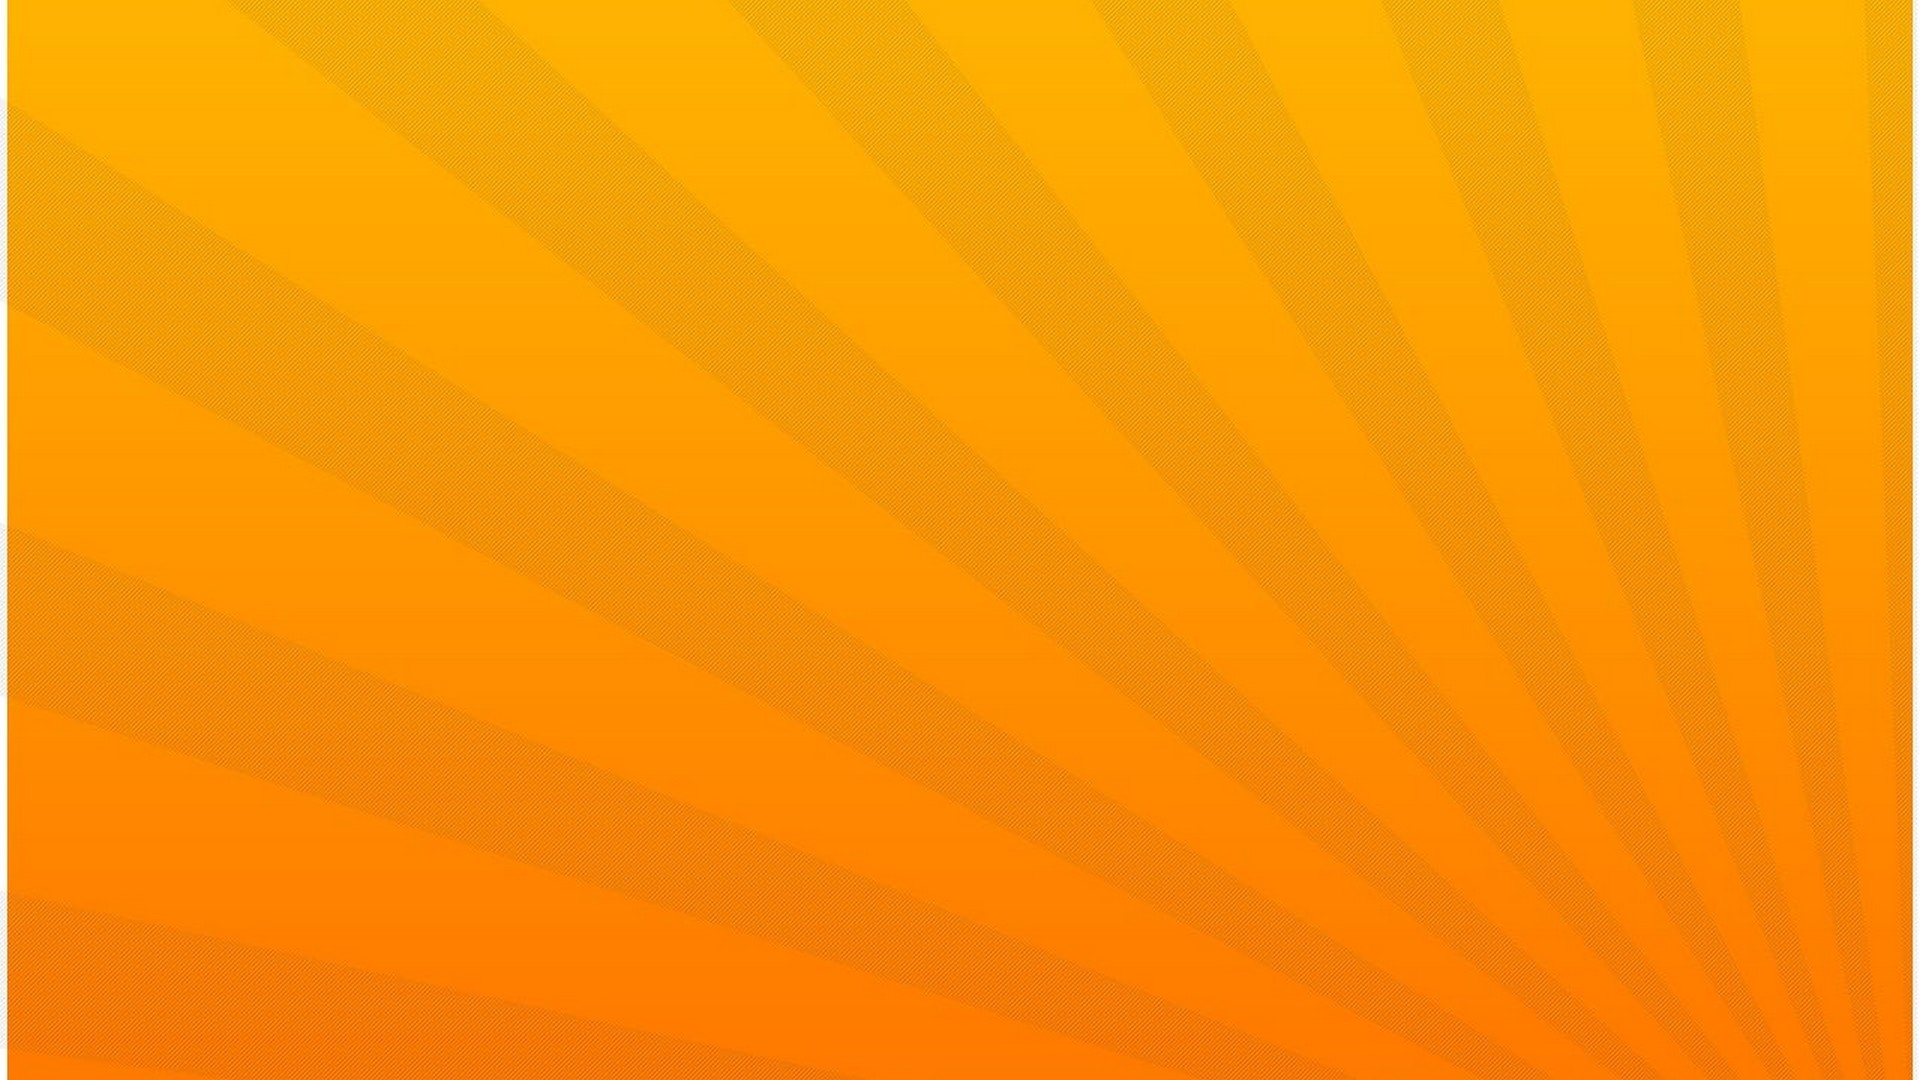 Aesthetic Yellow And Orange Wallpapers